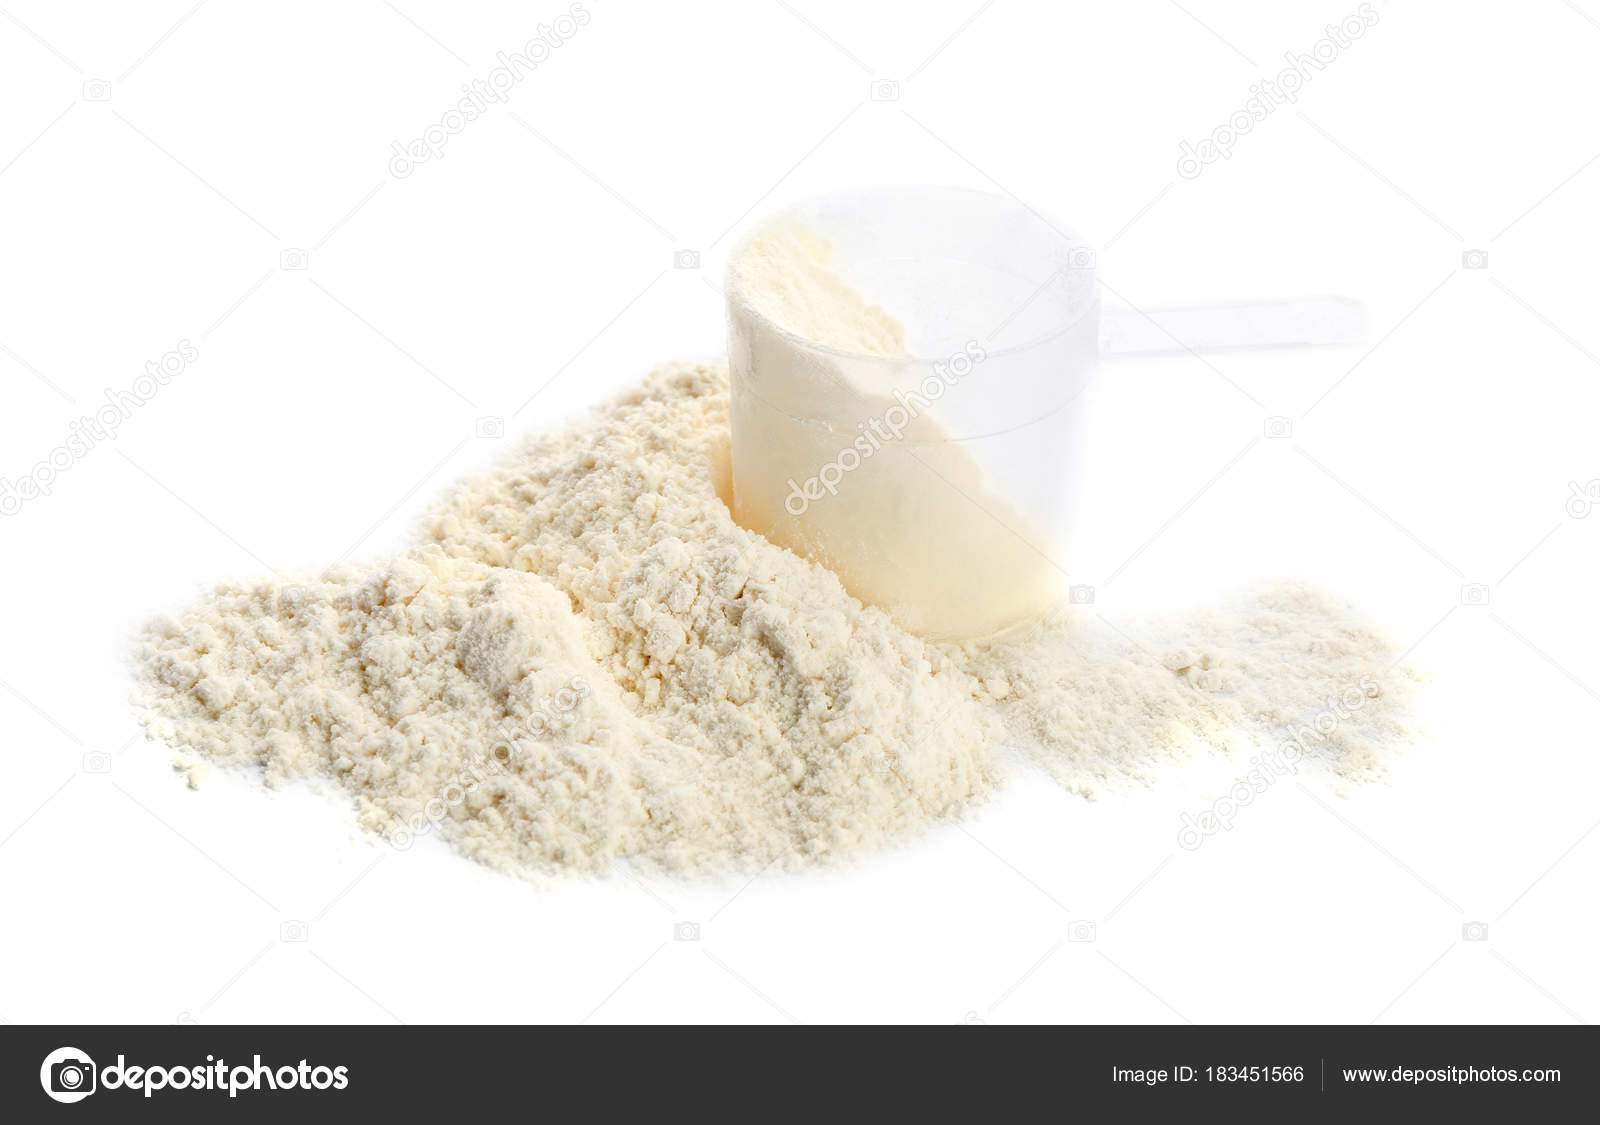 https://st3.depositphotos.com/1177973/18345/i/1600/depositphotos_183451566-stock-photo-measuring-scoop-protein-powder-white.jpg